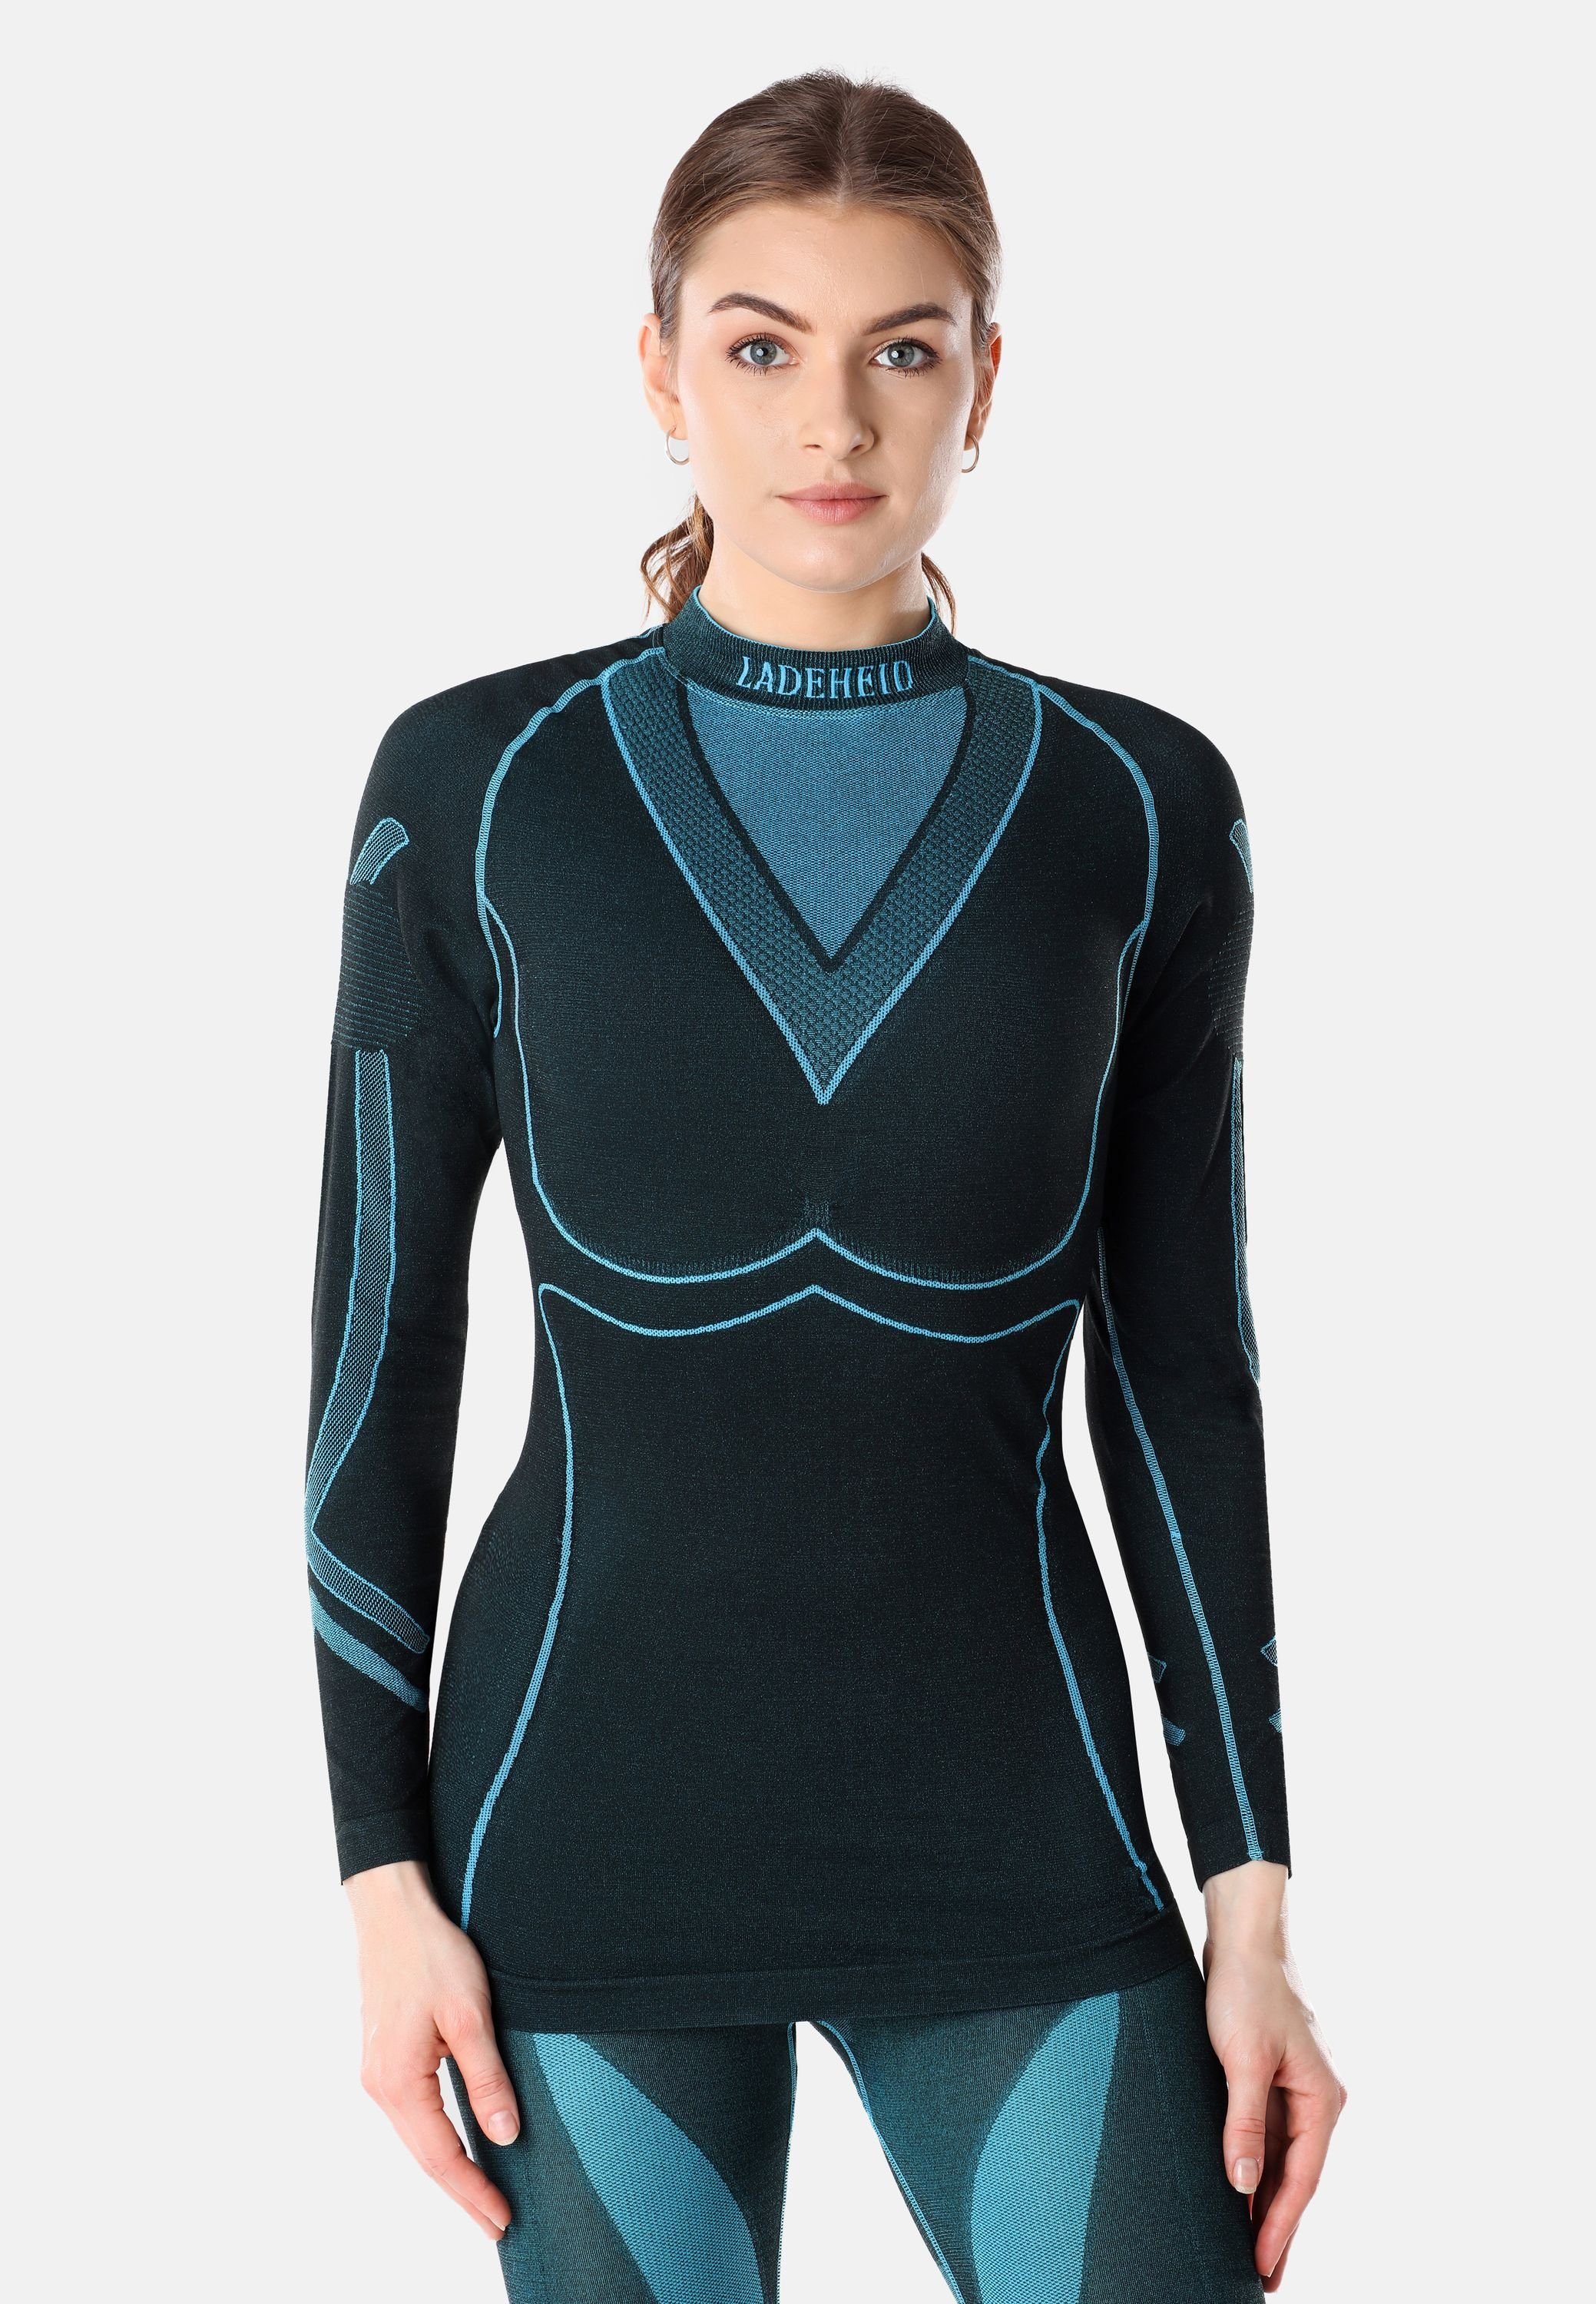 Ladeheid Funktionsunterhemd Damen Shirt Schwarz/Turquoise Thermoaktiv LAGI004 Funktionsunterwäsche langarm